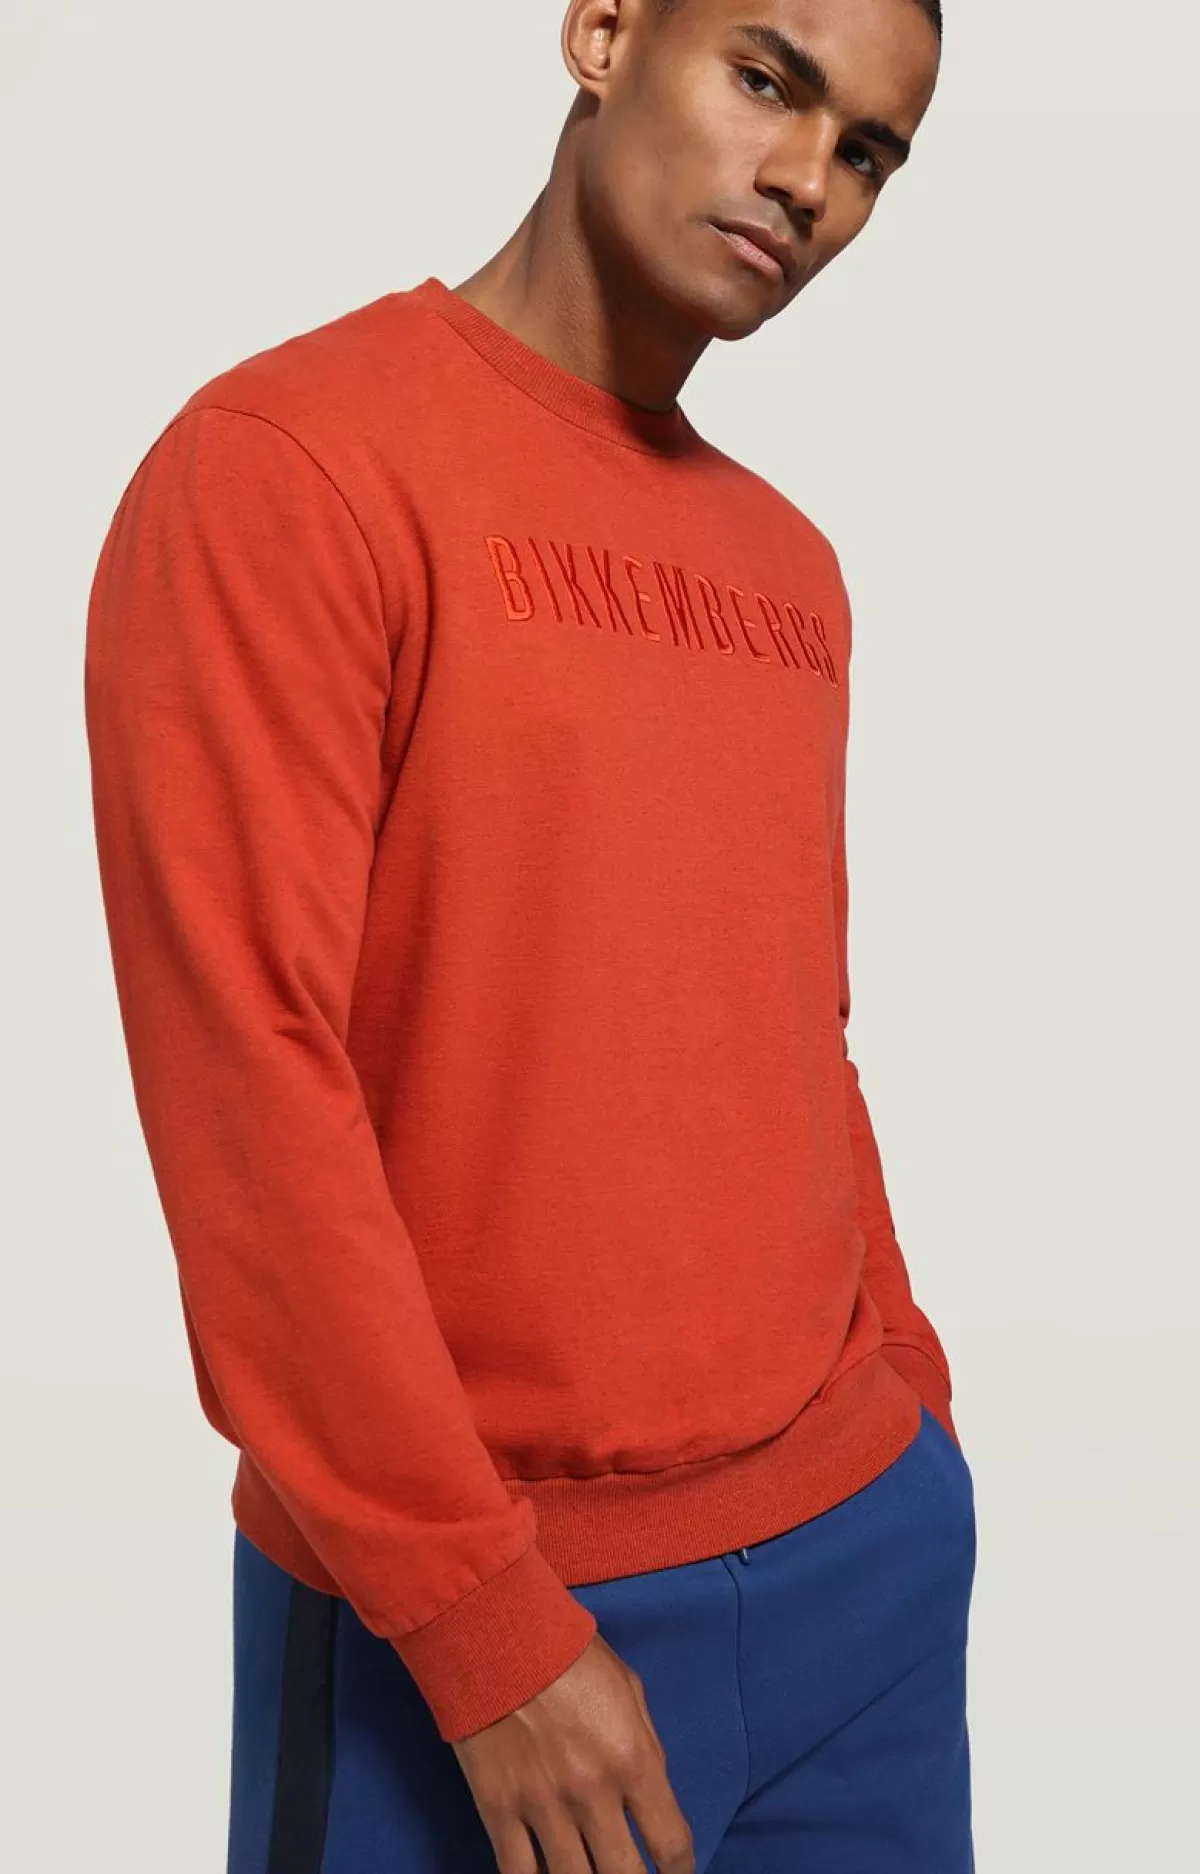 Bikkembergs Men'S Embroidered Sweatshirt Orange Flash Sale